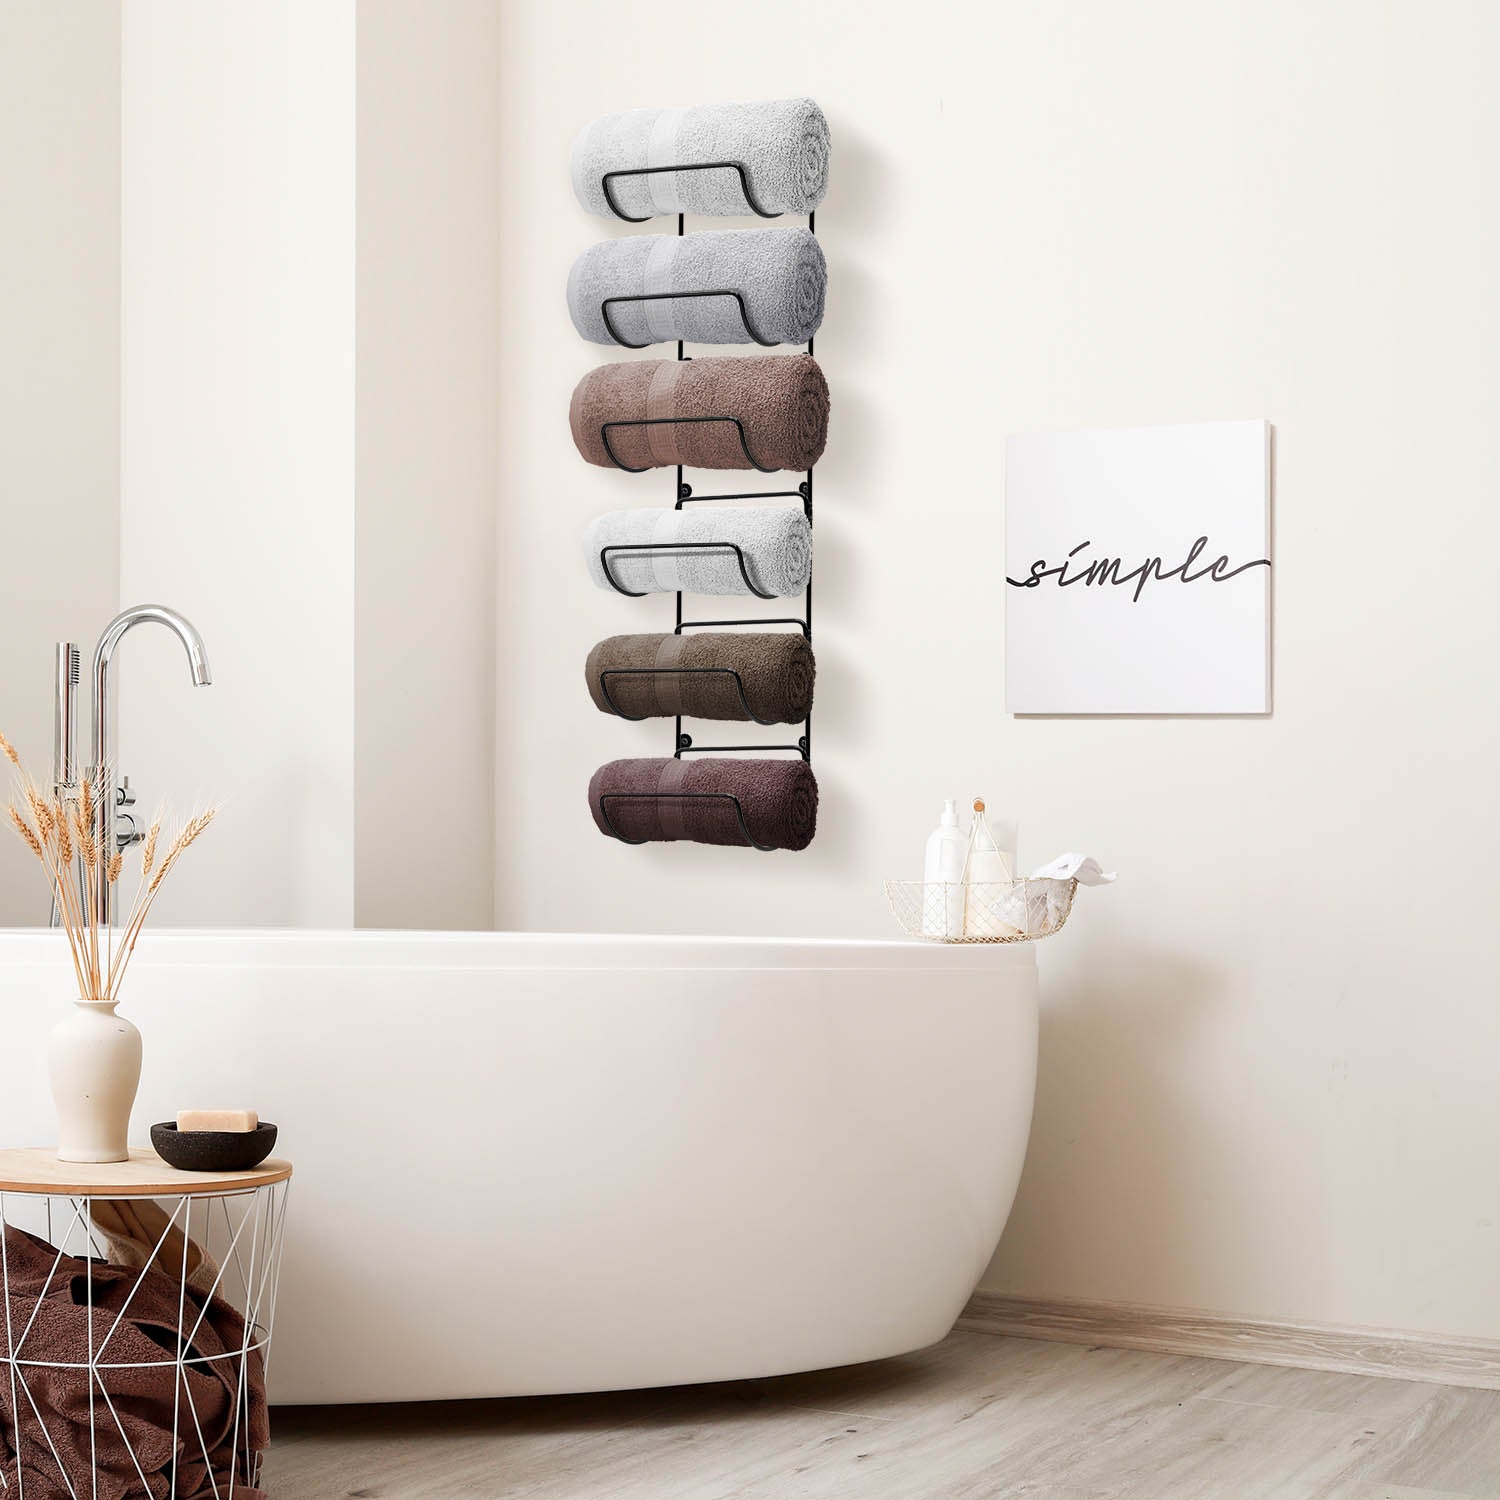 Bathroom Organizer Ledge Shelf, Wall Storage Bins With Towel Rack, Wall  Storage Basket For Bath